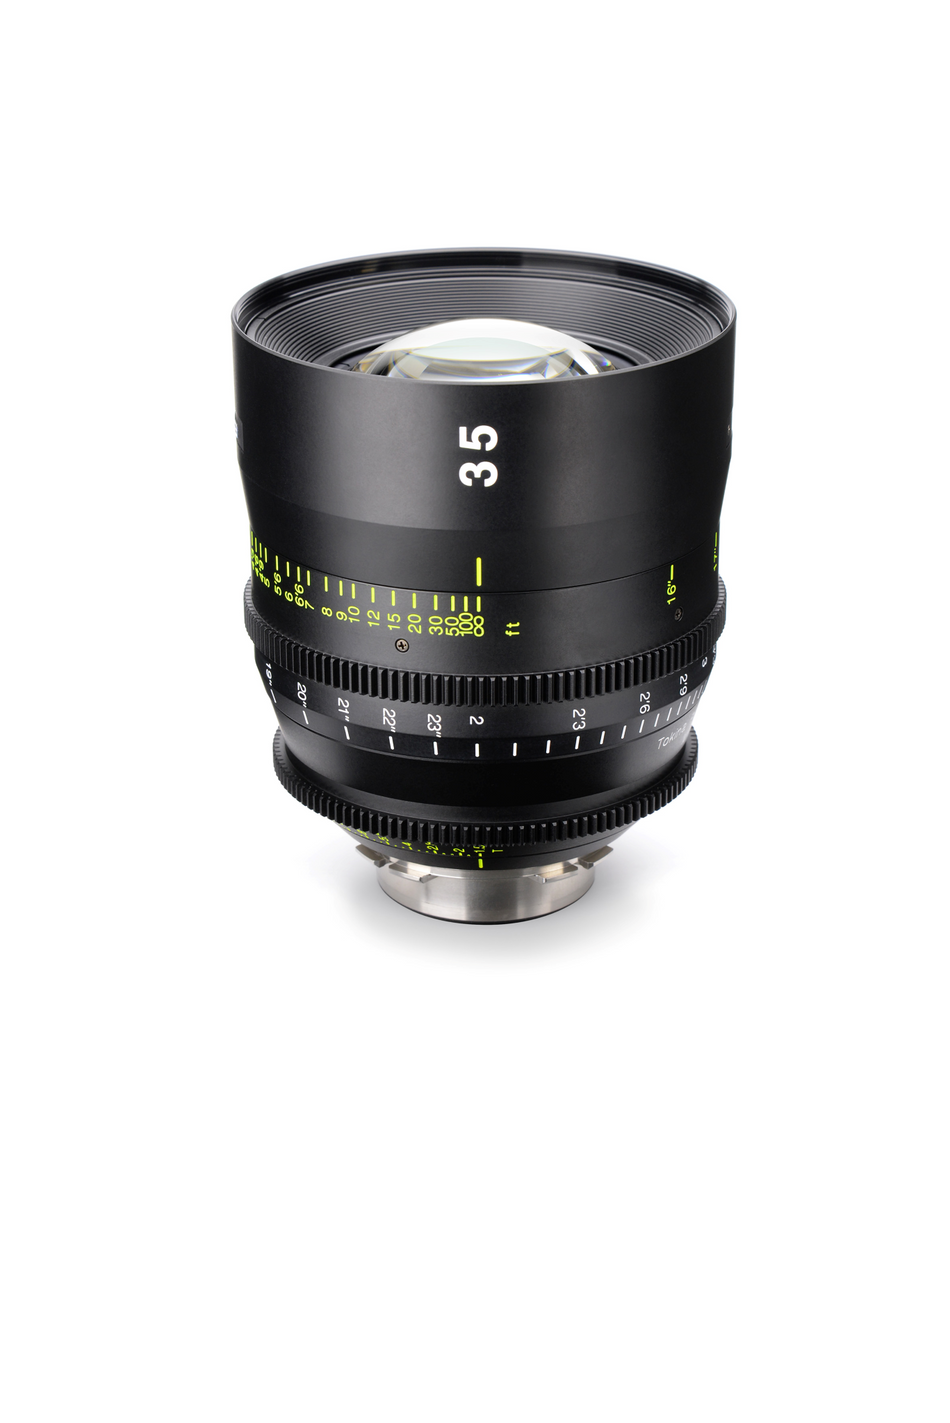 Tokina 35mm T1.5 Cinema Vista Prime Lens (MFT Mount, Focus Scale in Feet)